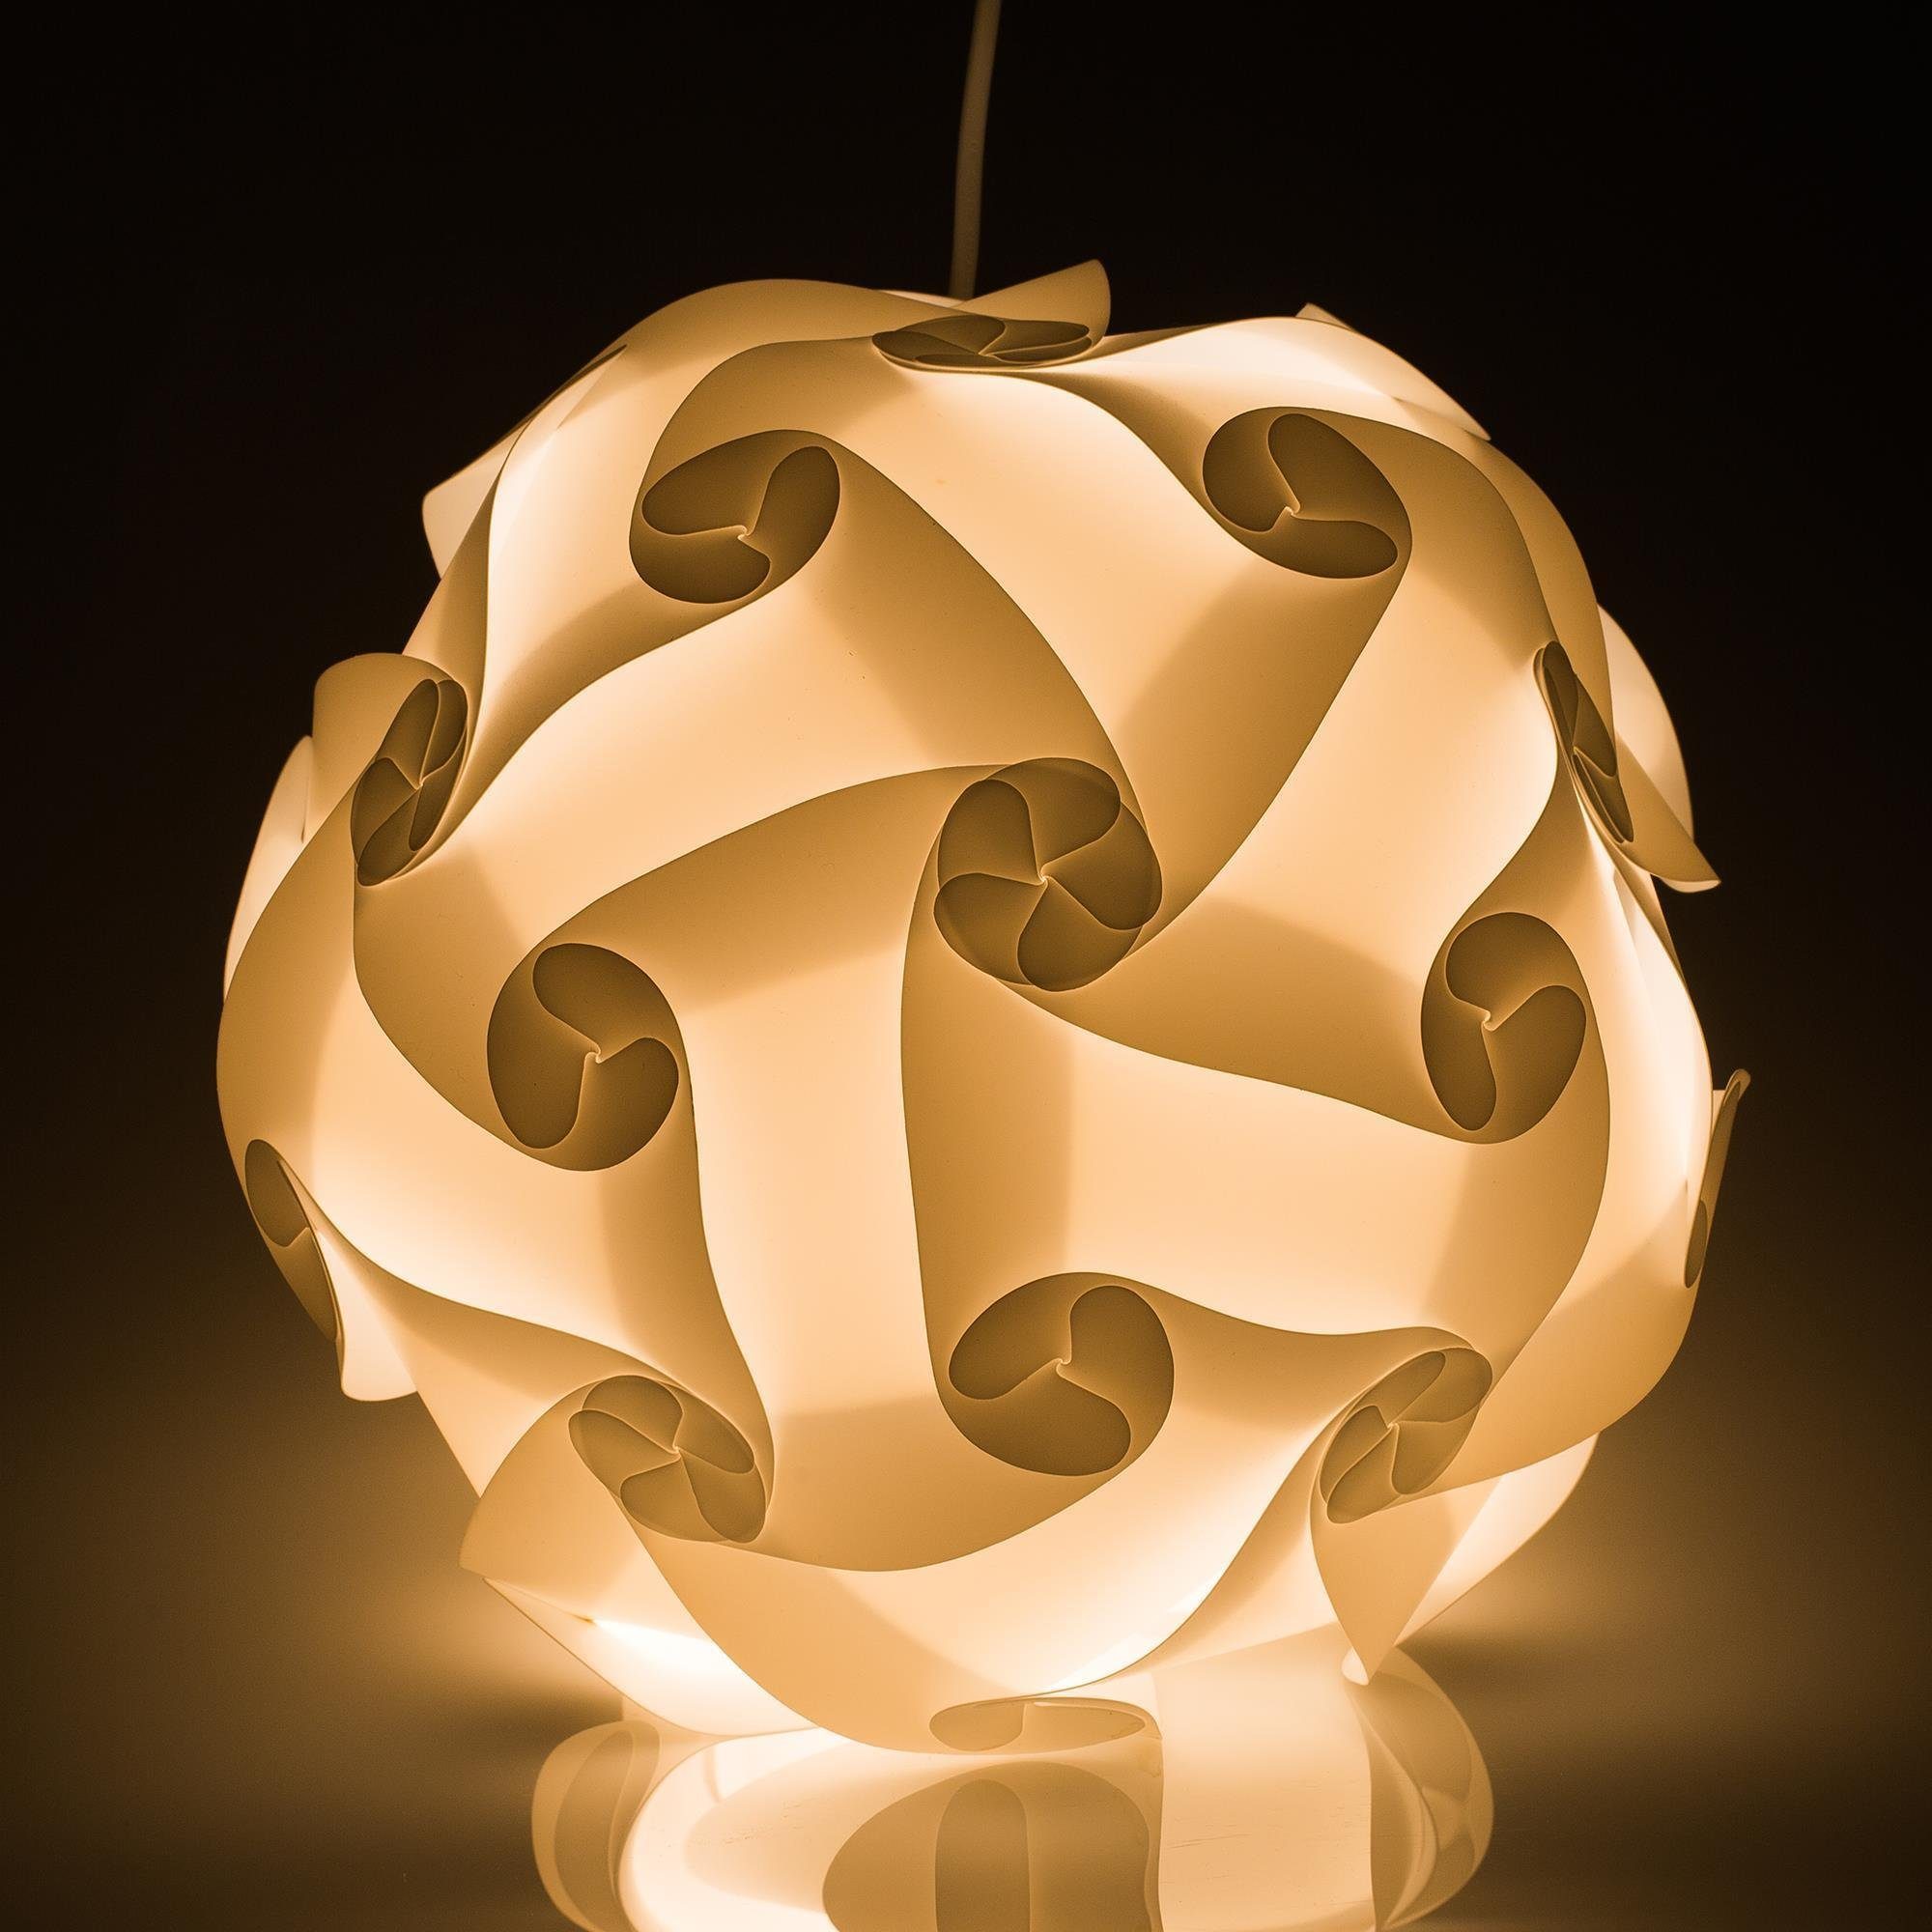 EAZY CASE Lampenschirm DIY Stehlampe etwa Leuchte Puzzle Lampe Puzzle Schirm DIY Lampenschirme, 30 Weiß Lampenschirm cm